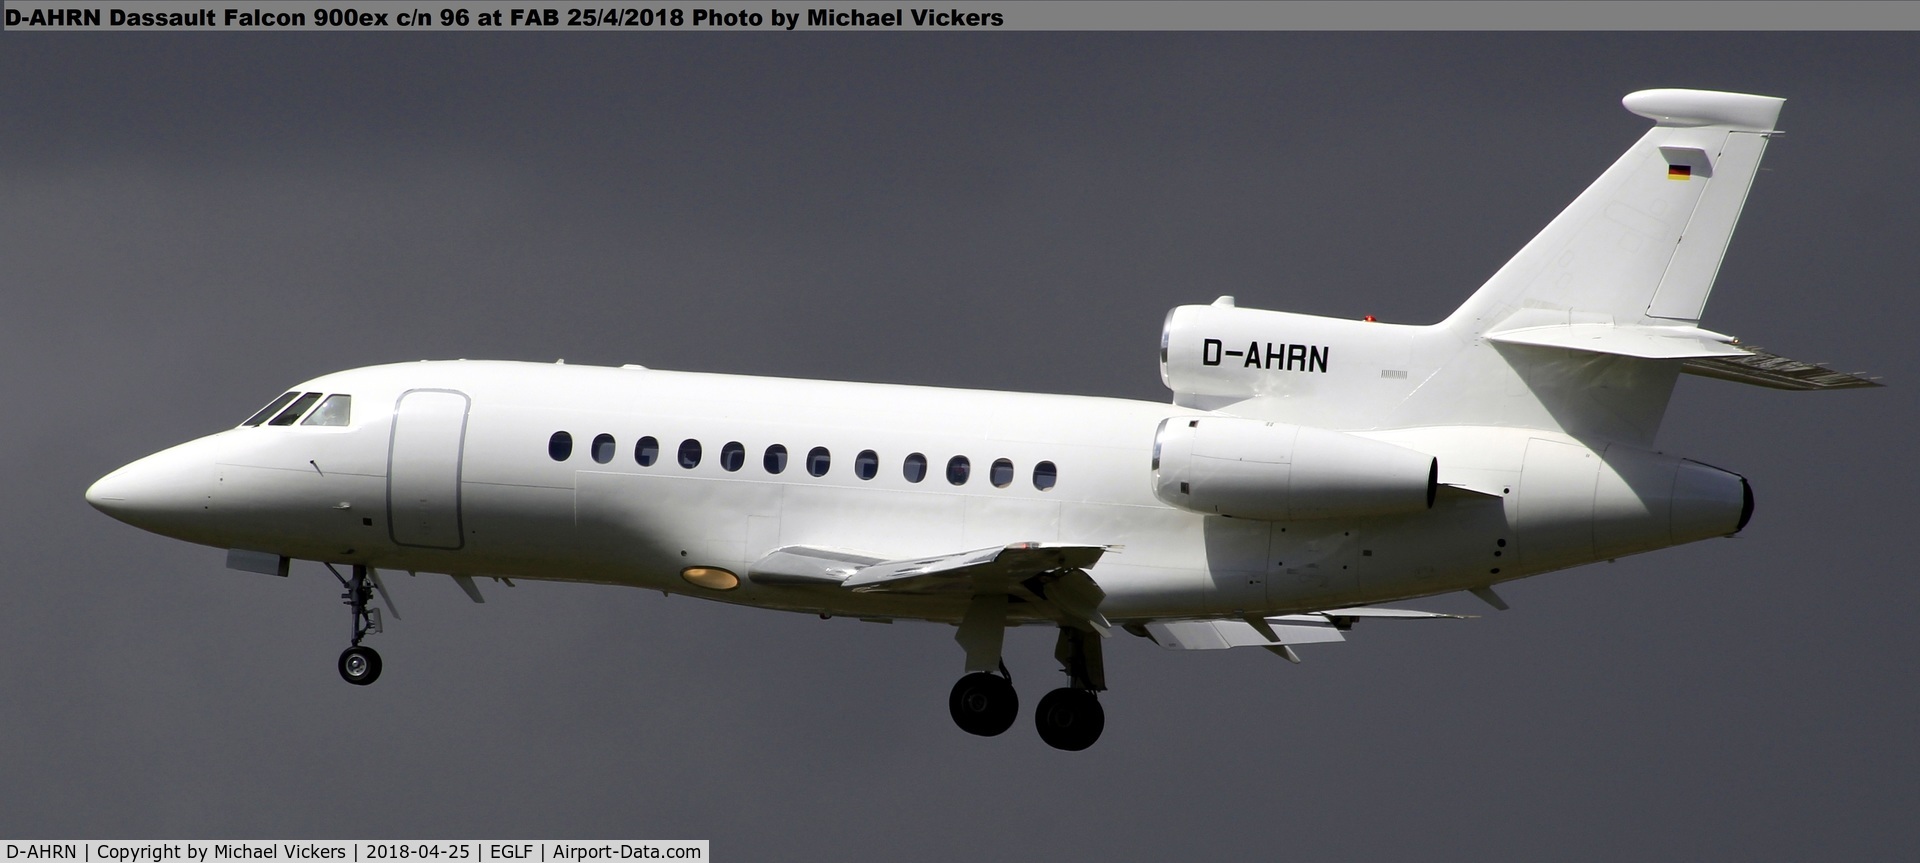 D-AHRN, 2001 Dassault Falcon 900EX C/N 96, Landing runway 24